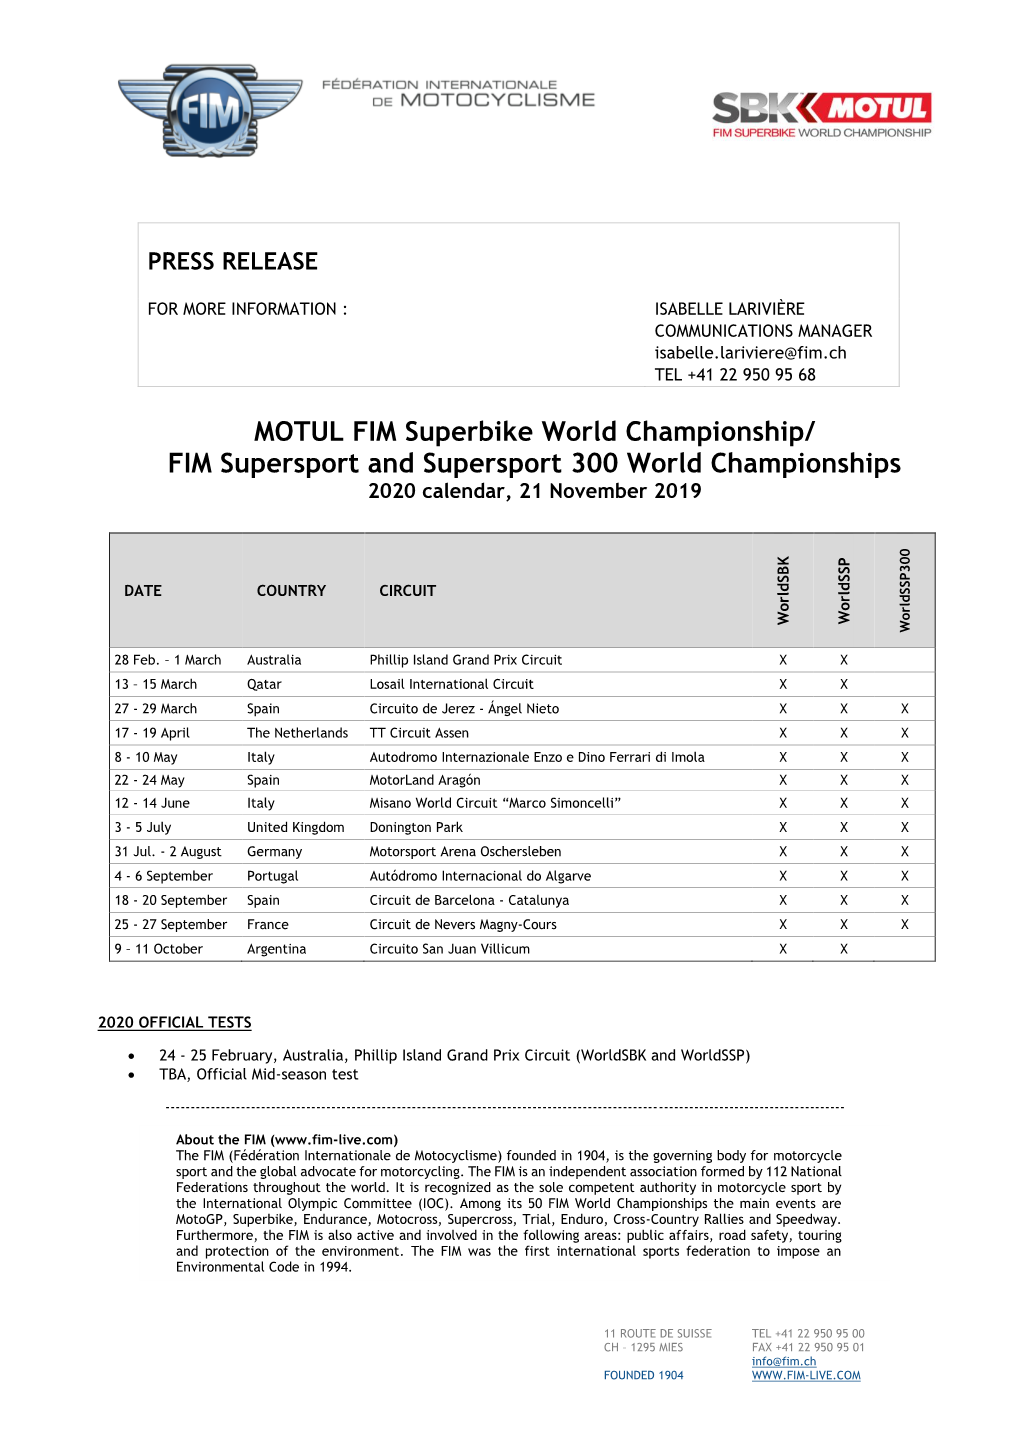 MOTUL FIM Superbike World Championship/ FIM Supersport and Supersport 300 World Championships 2020 Calendar, 21 November 2019